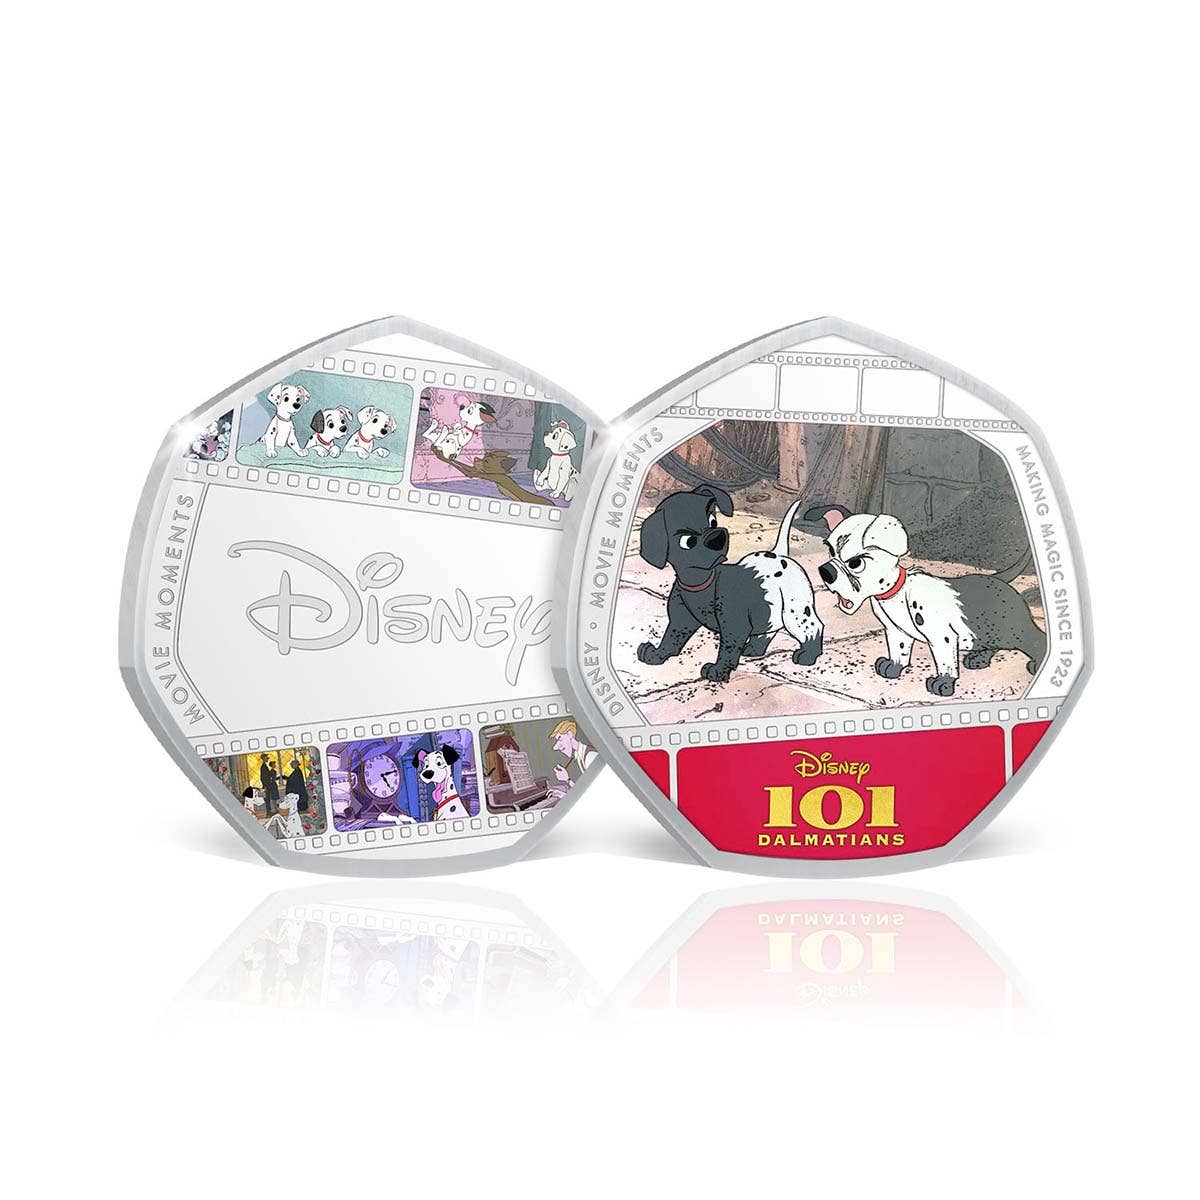 The Disney Movie Moments Complete Set - 101 Dalmatians